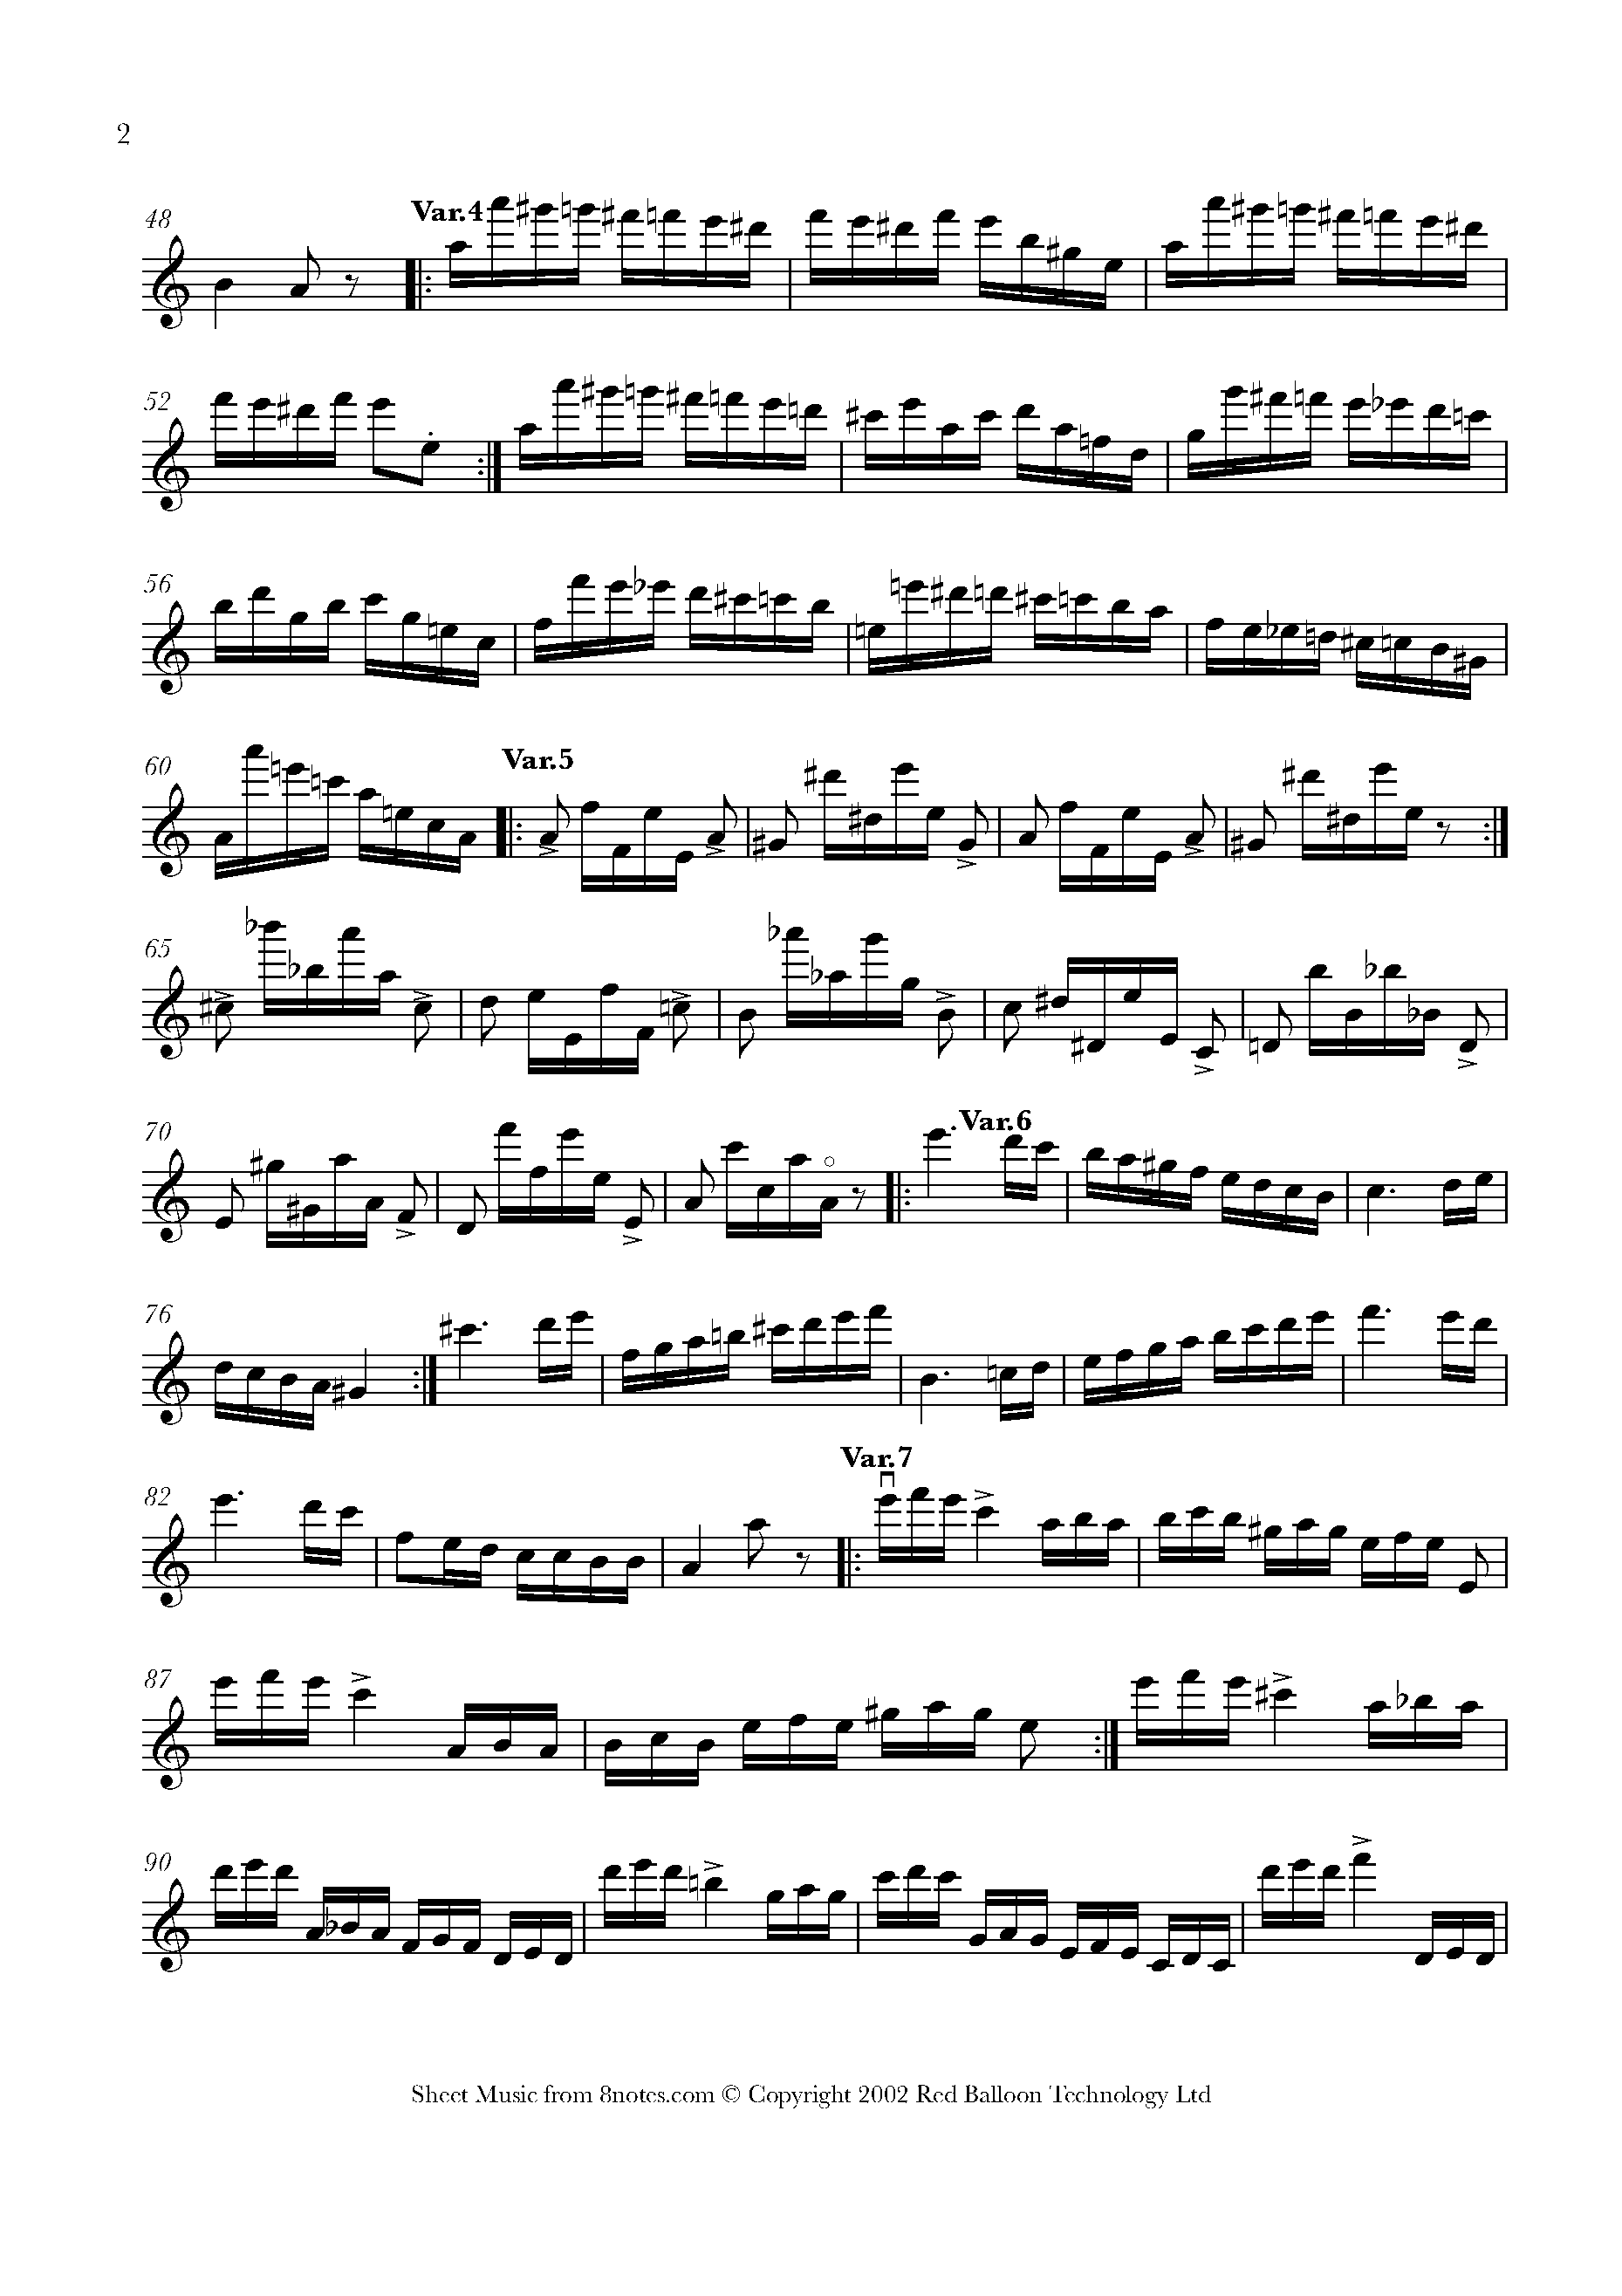 Paganini: 24 Caprices. Паганини каприз 24. Каприс № 24 ля минор Никколо Паганини. Каприс 24 Паганини рисунок.